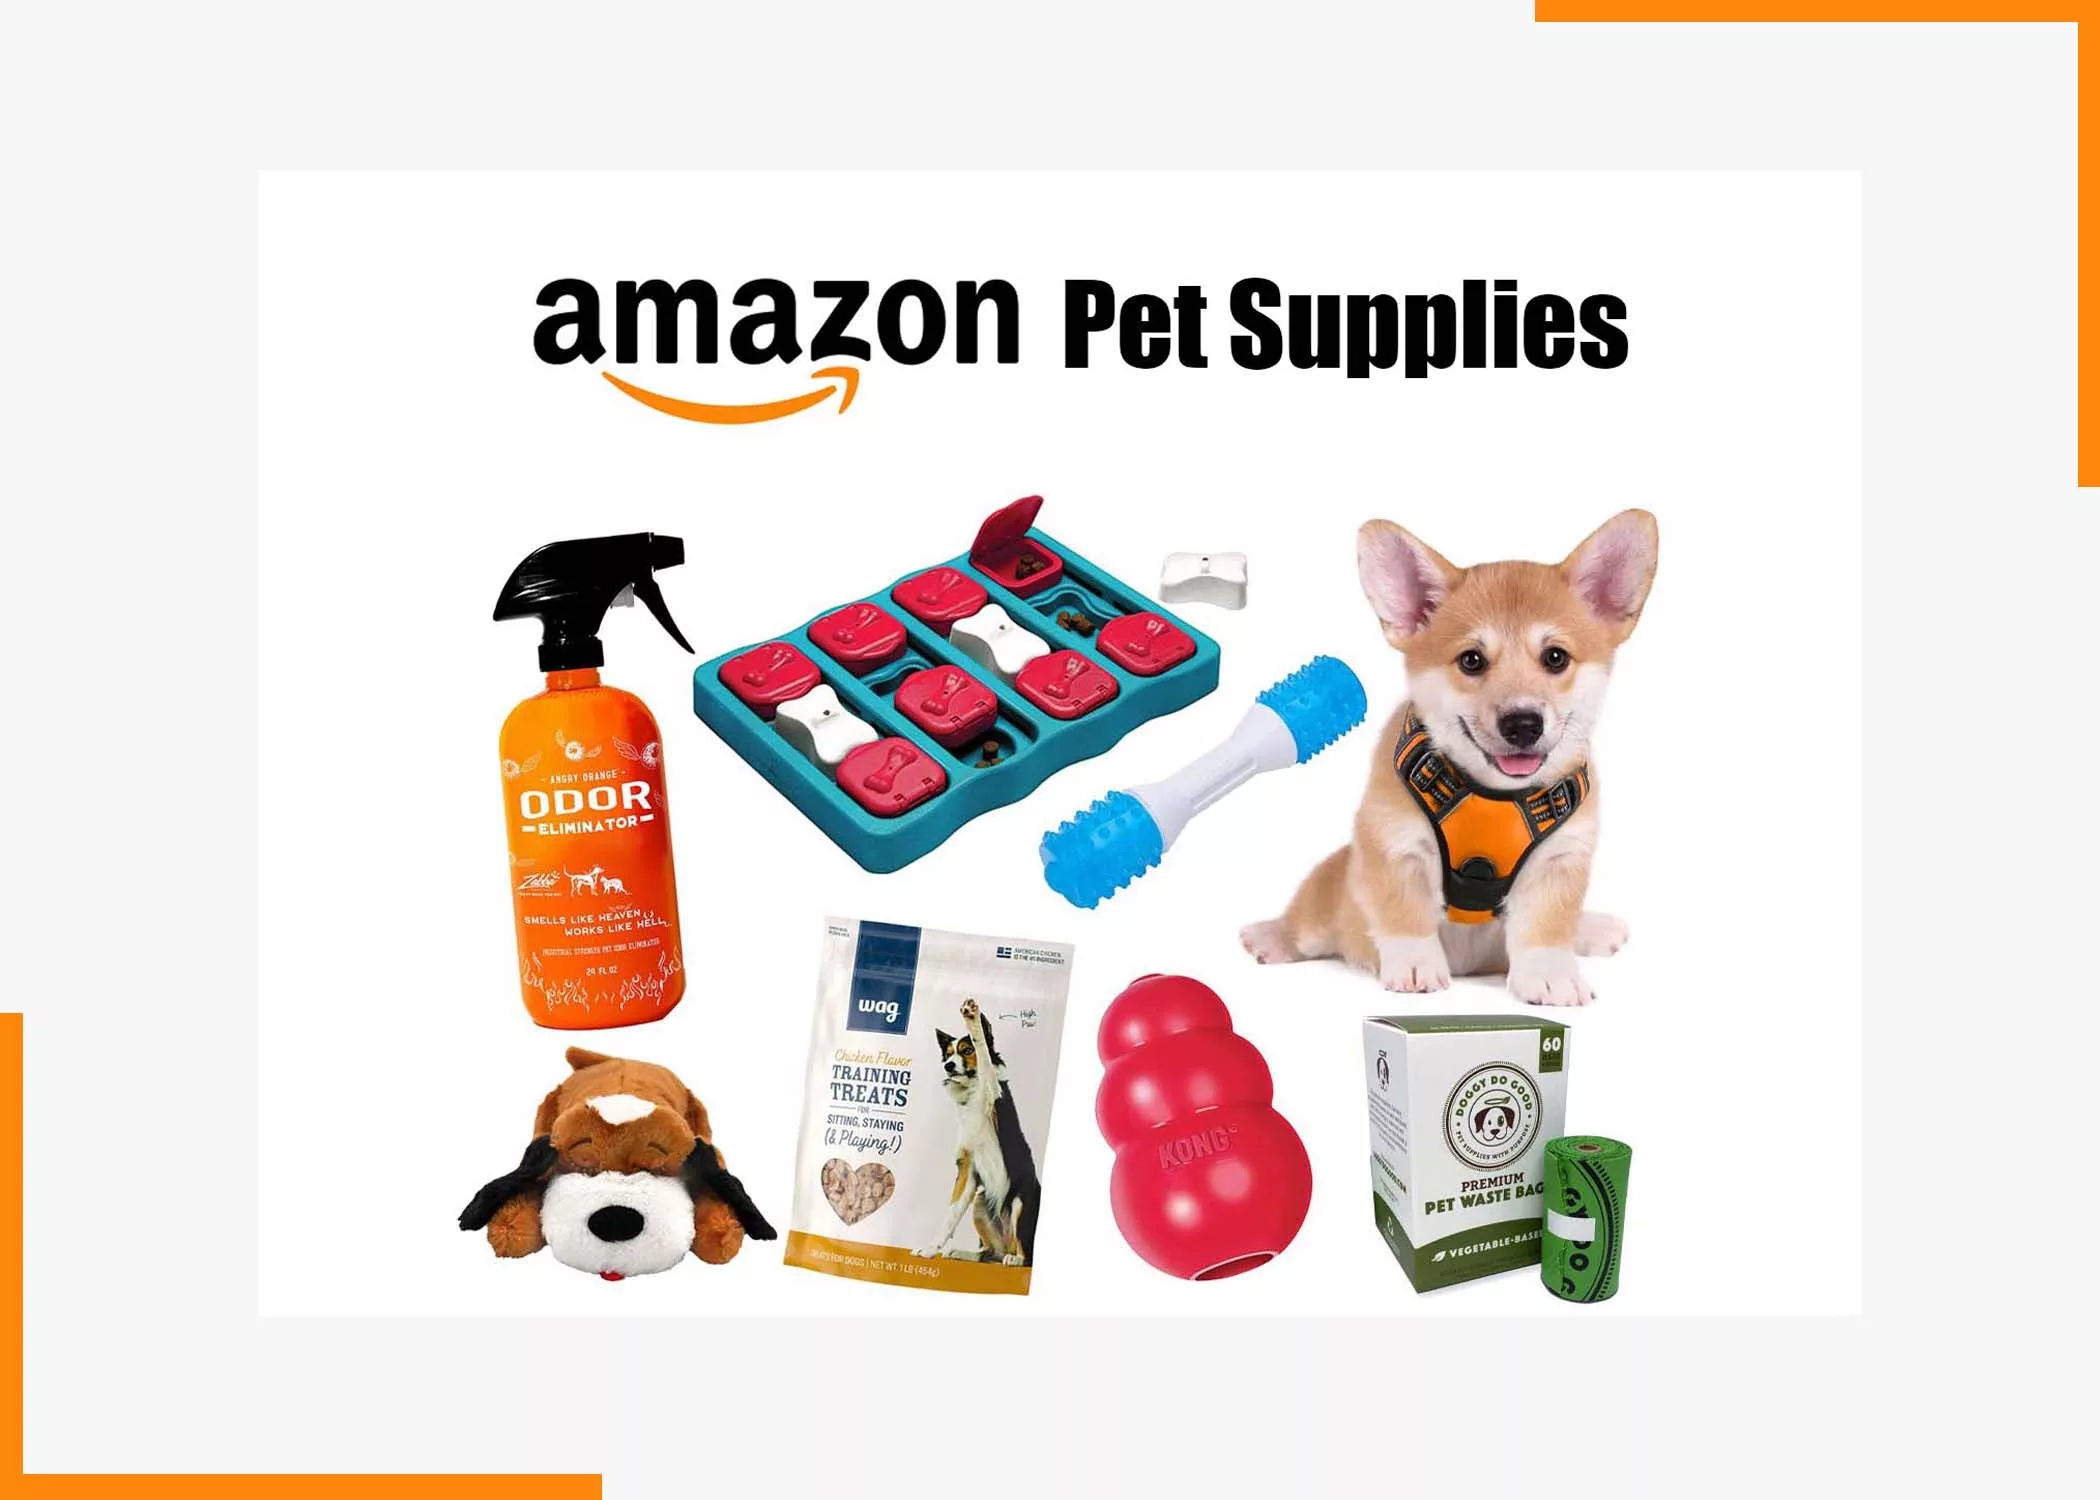 Amazon Pet Supplies